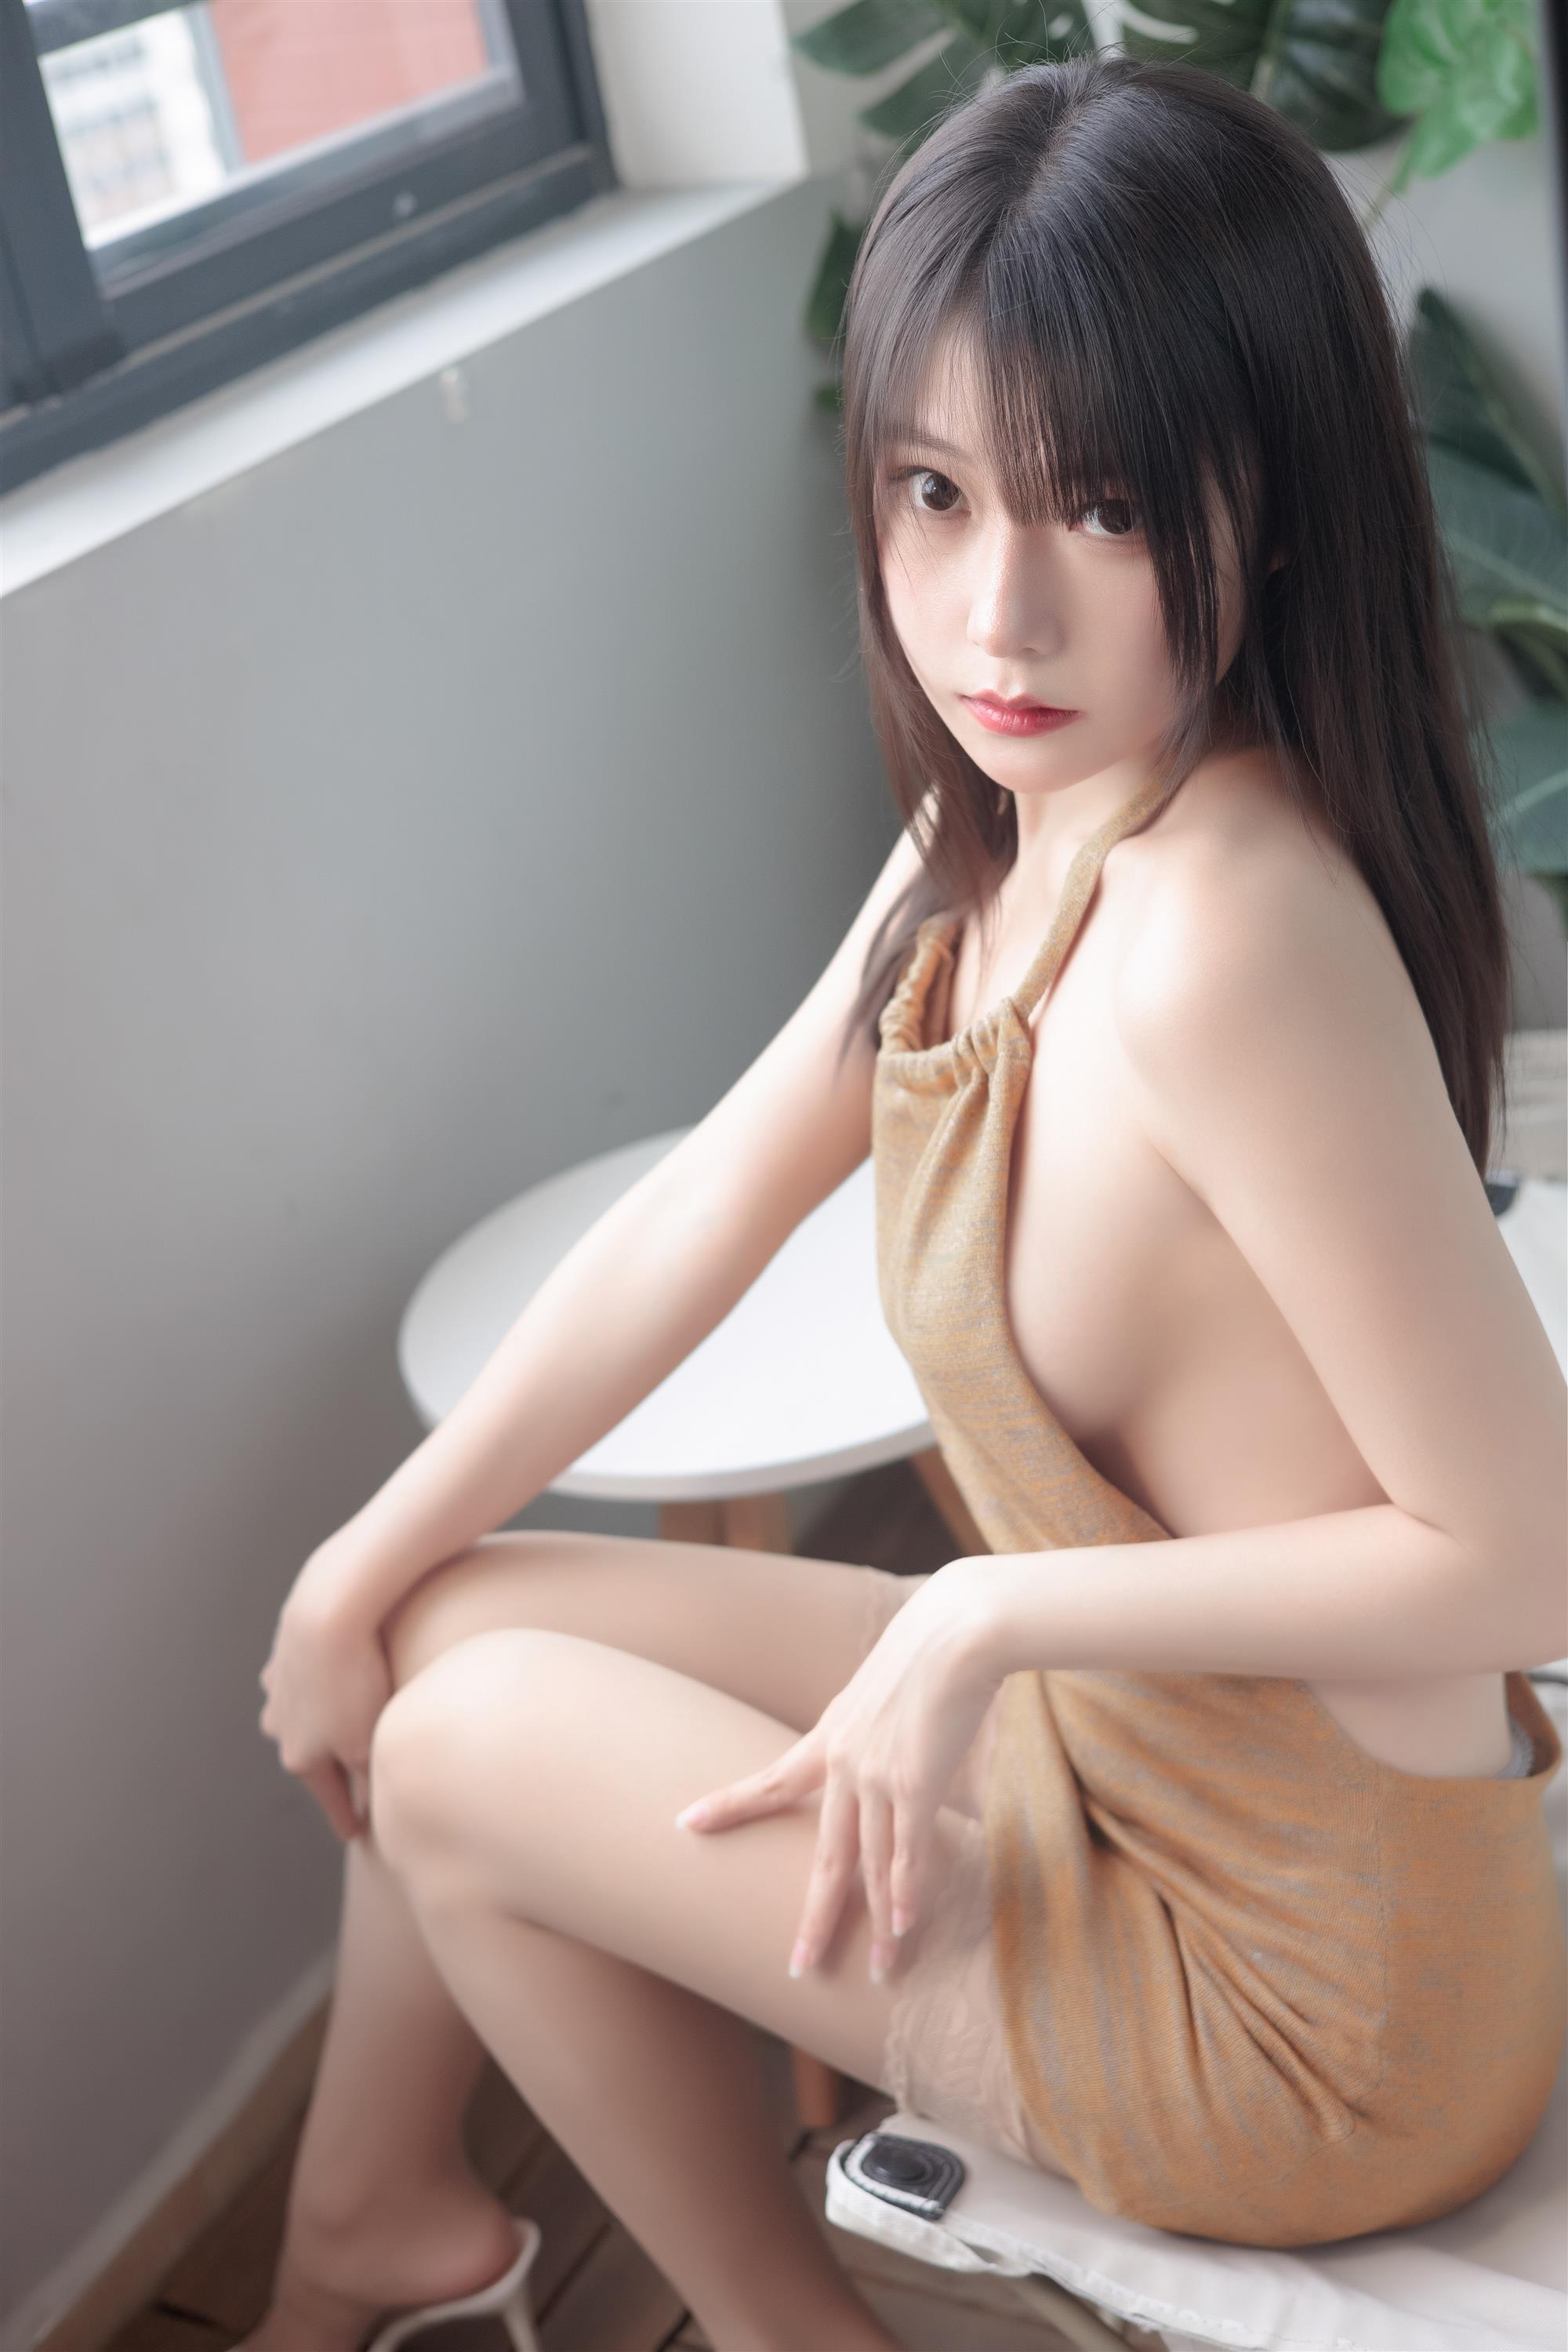 Cosplay 香草喵露露 backless dress - 9.jpg